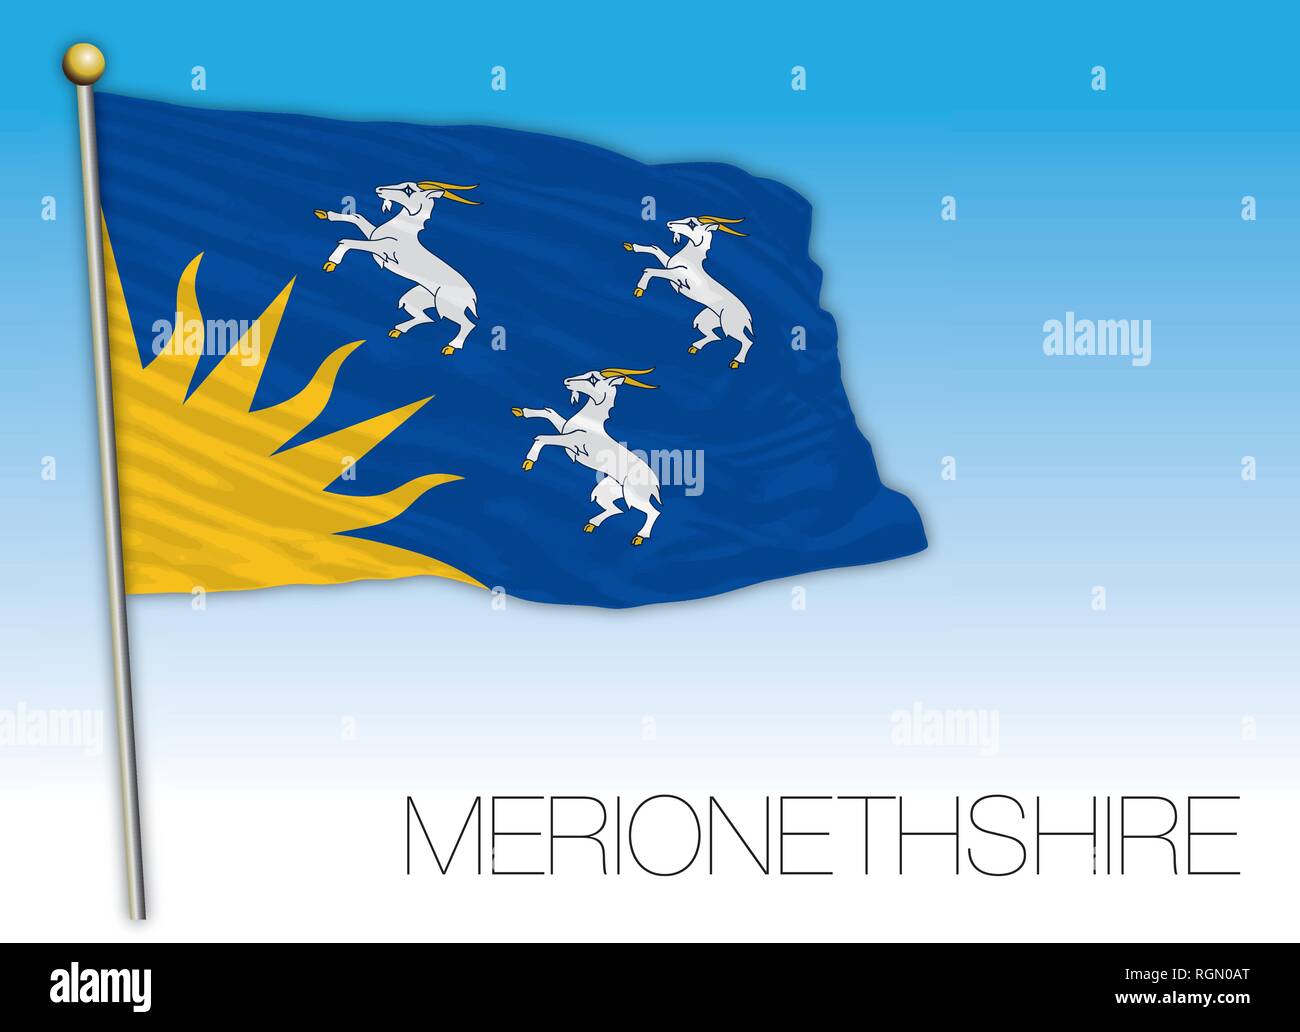 Merionethshire county flag, United Kingdom, vector illustration Stock Vector